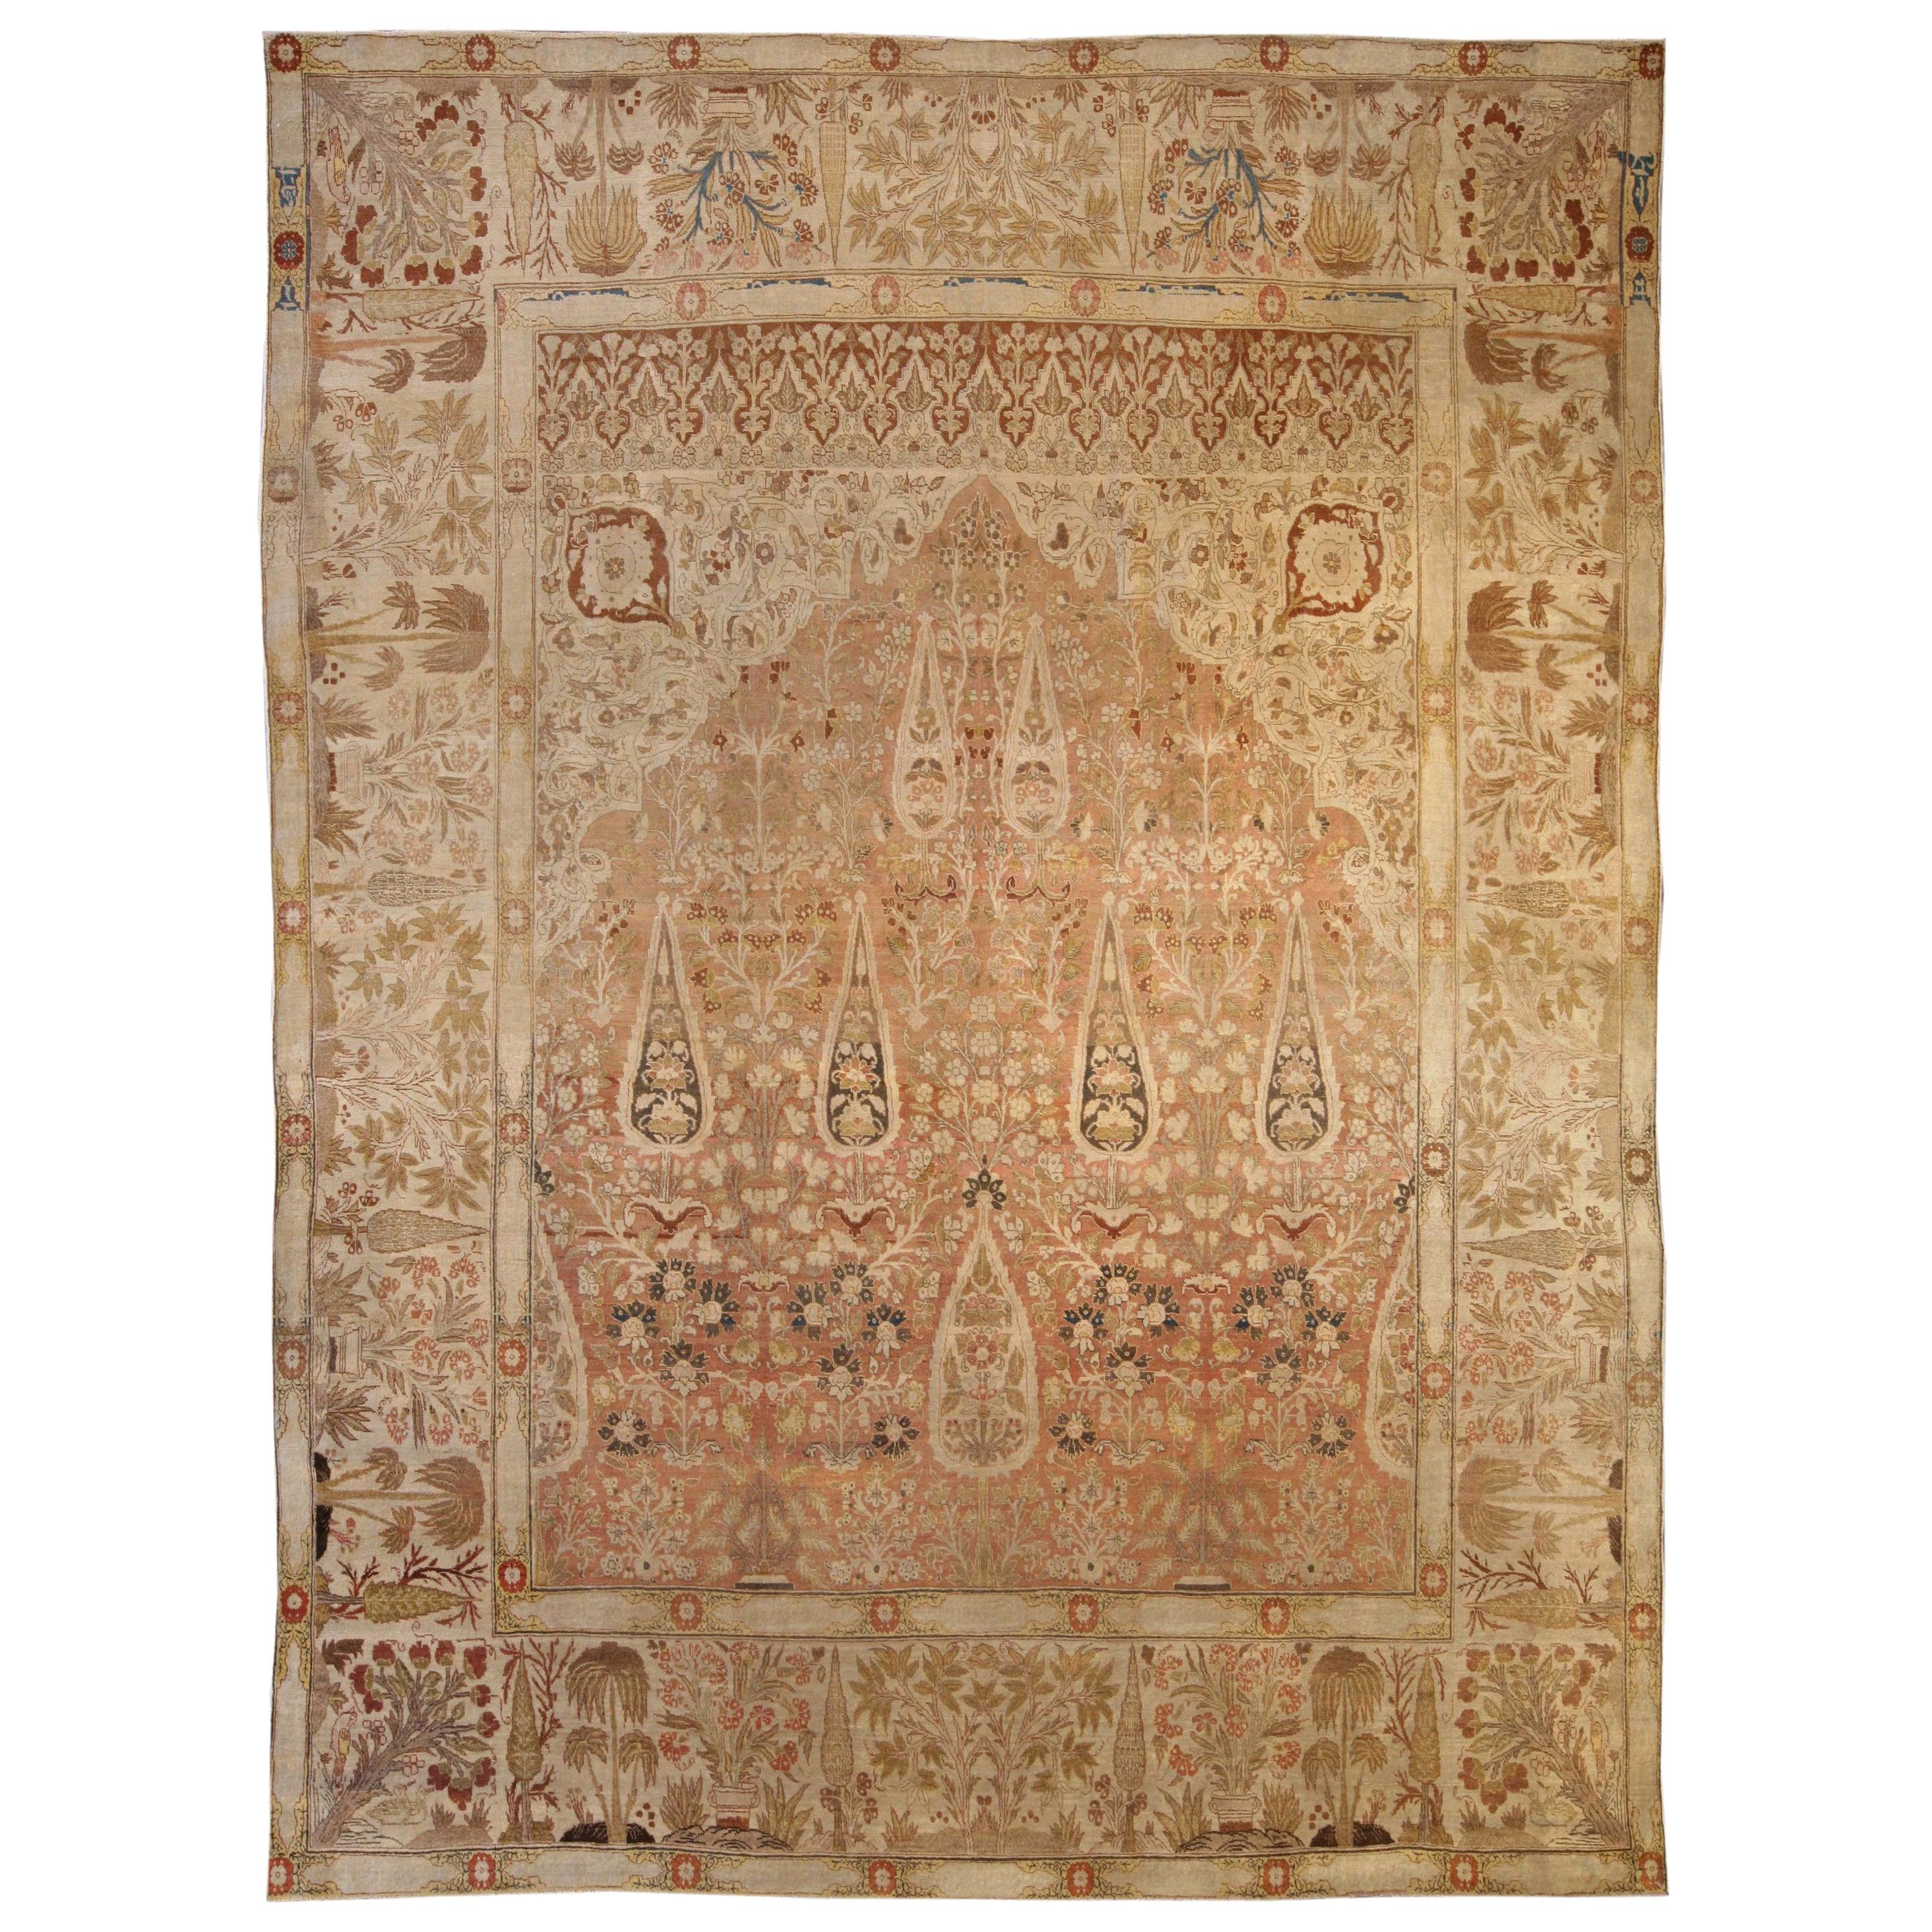 Doris Leslie Blau Collection Antique Persian Tabriz Handwoven Wool Rug